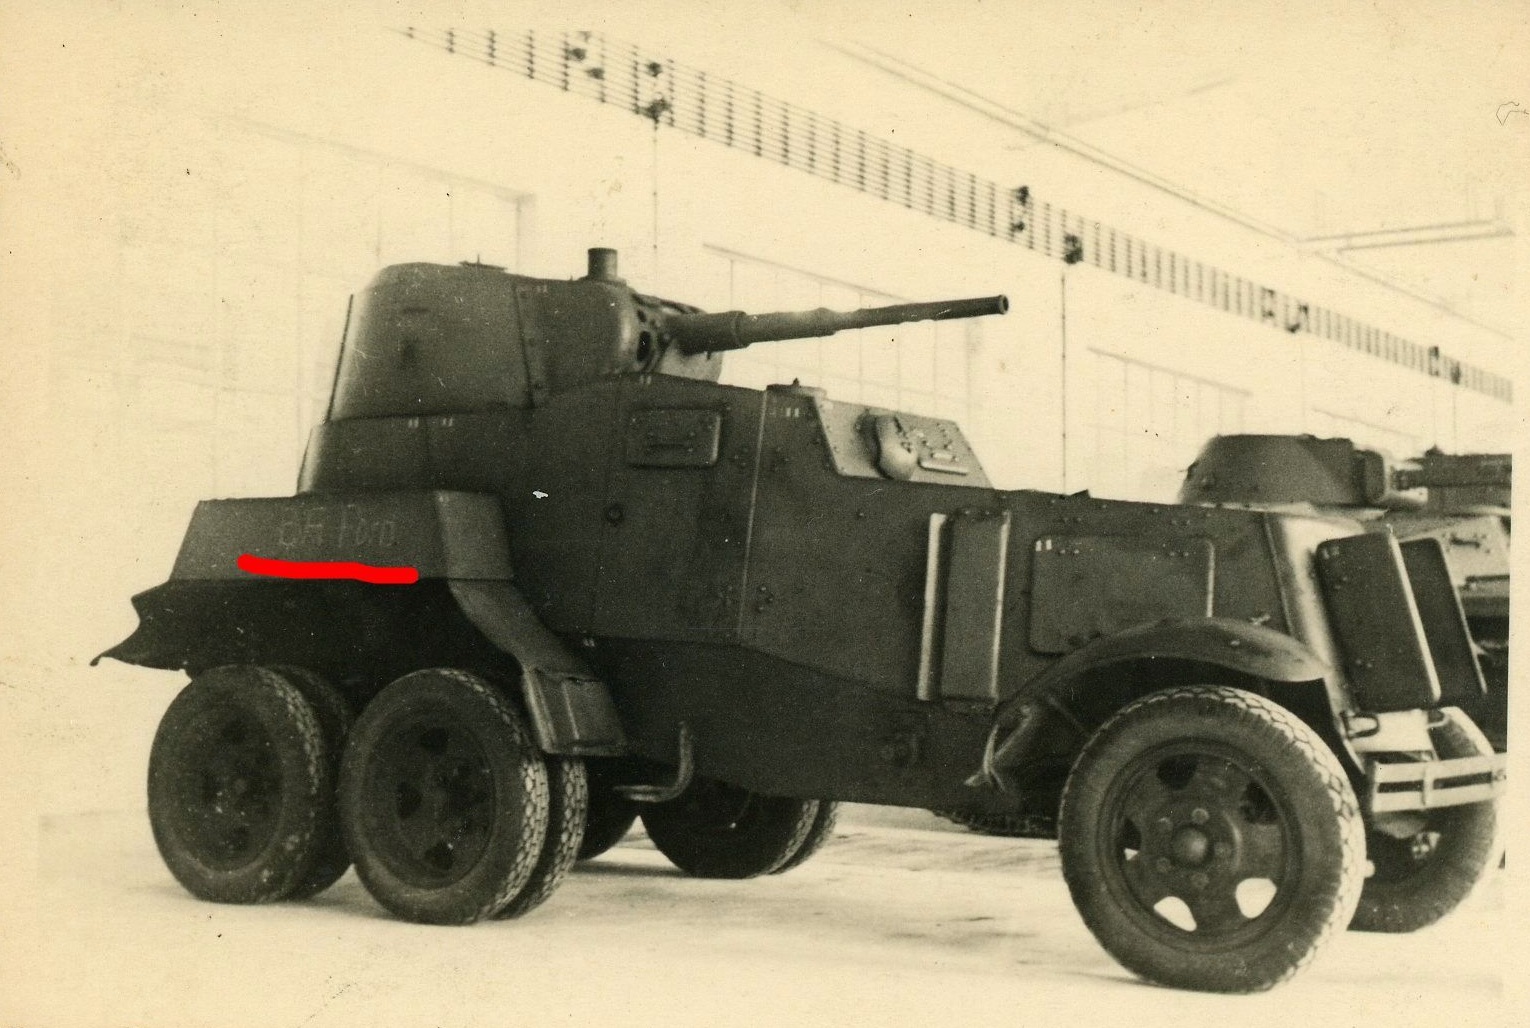 Ба ер. Ба-10 бронеавтомобиль. Советский бронеавтомобиль ба-10. Бронеавтомобиль ба-10м 1941. Ба-10 бронеавтомобиль РОА.